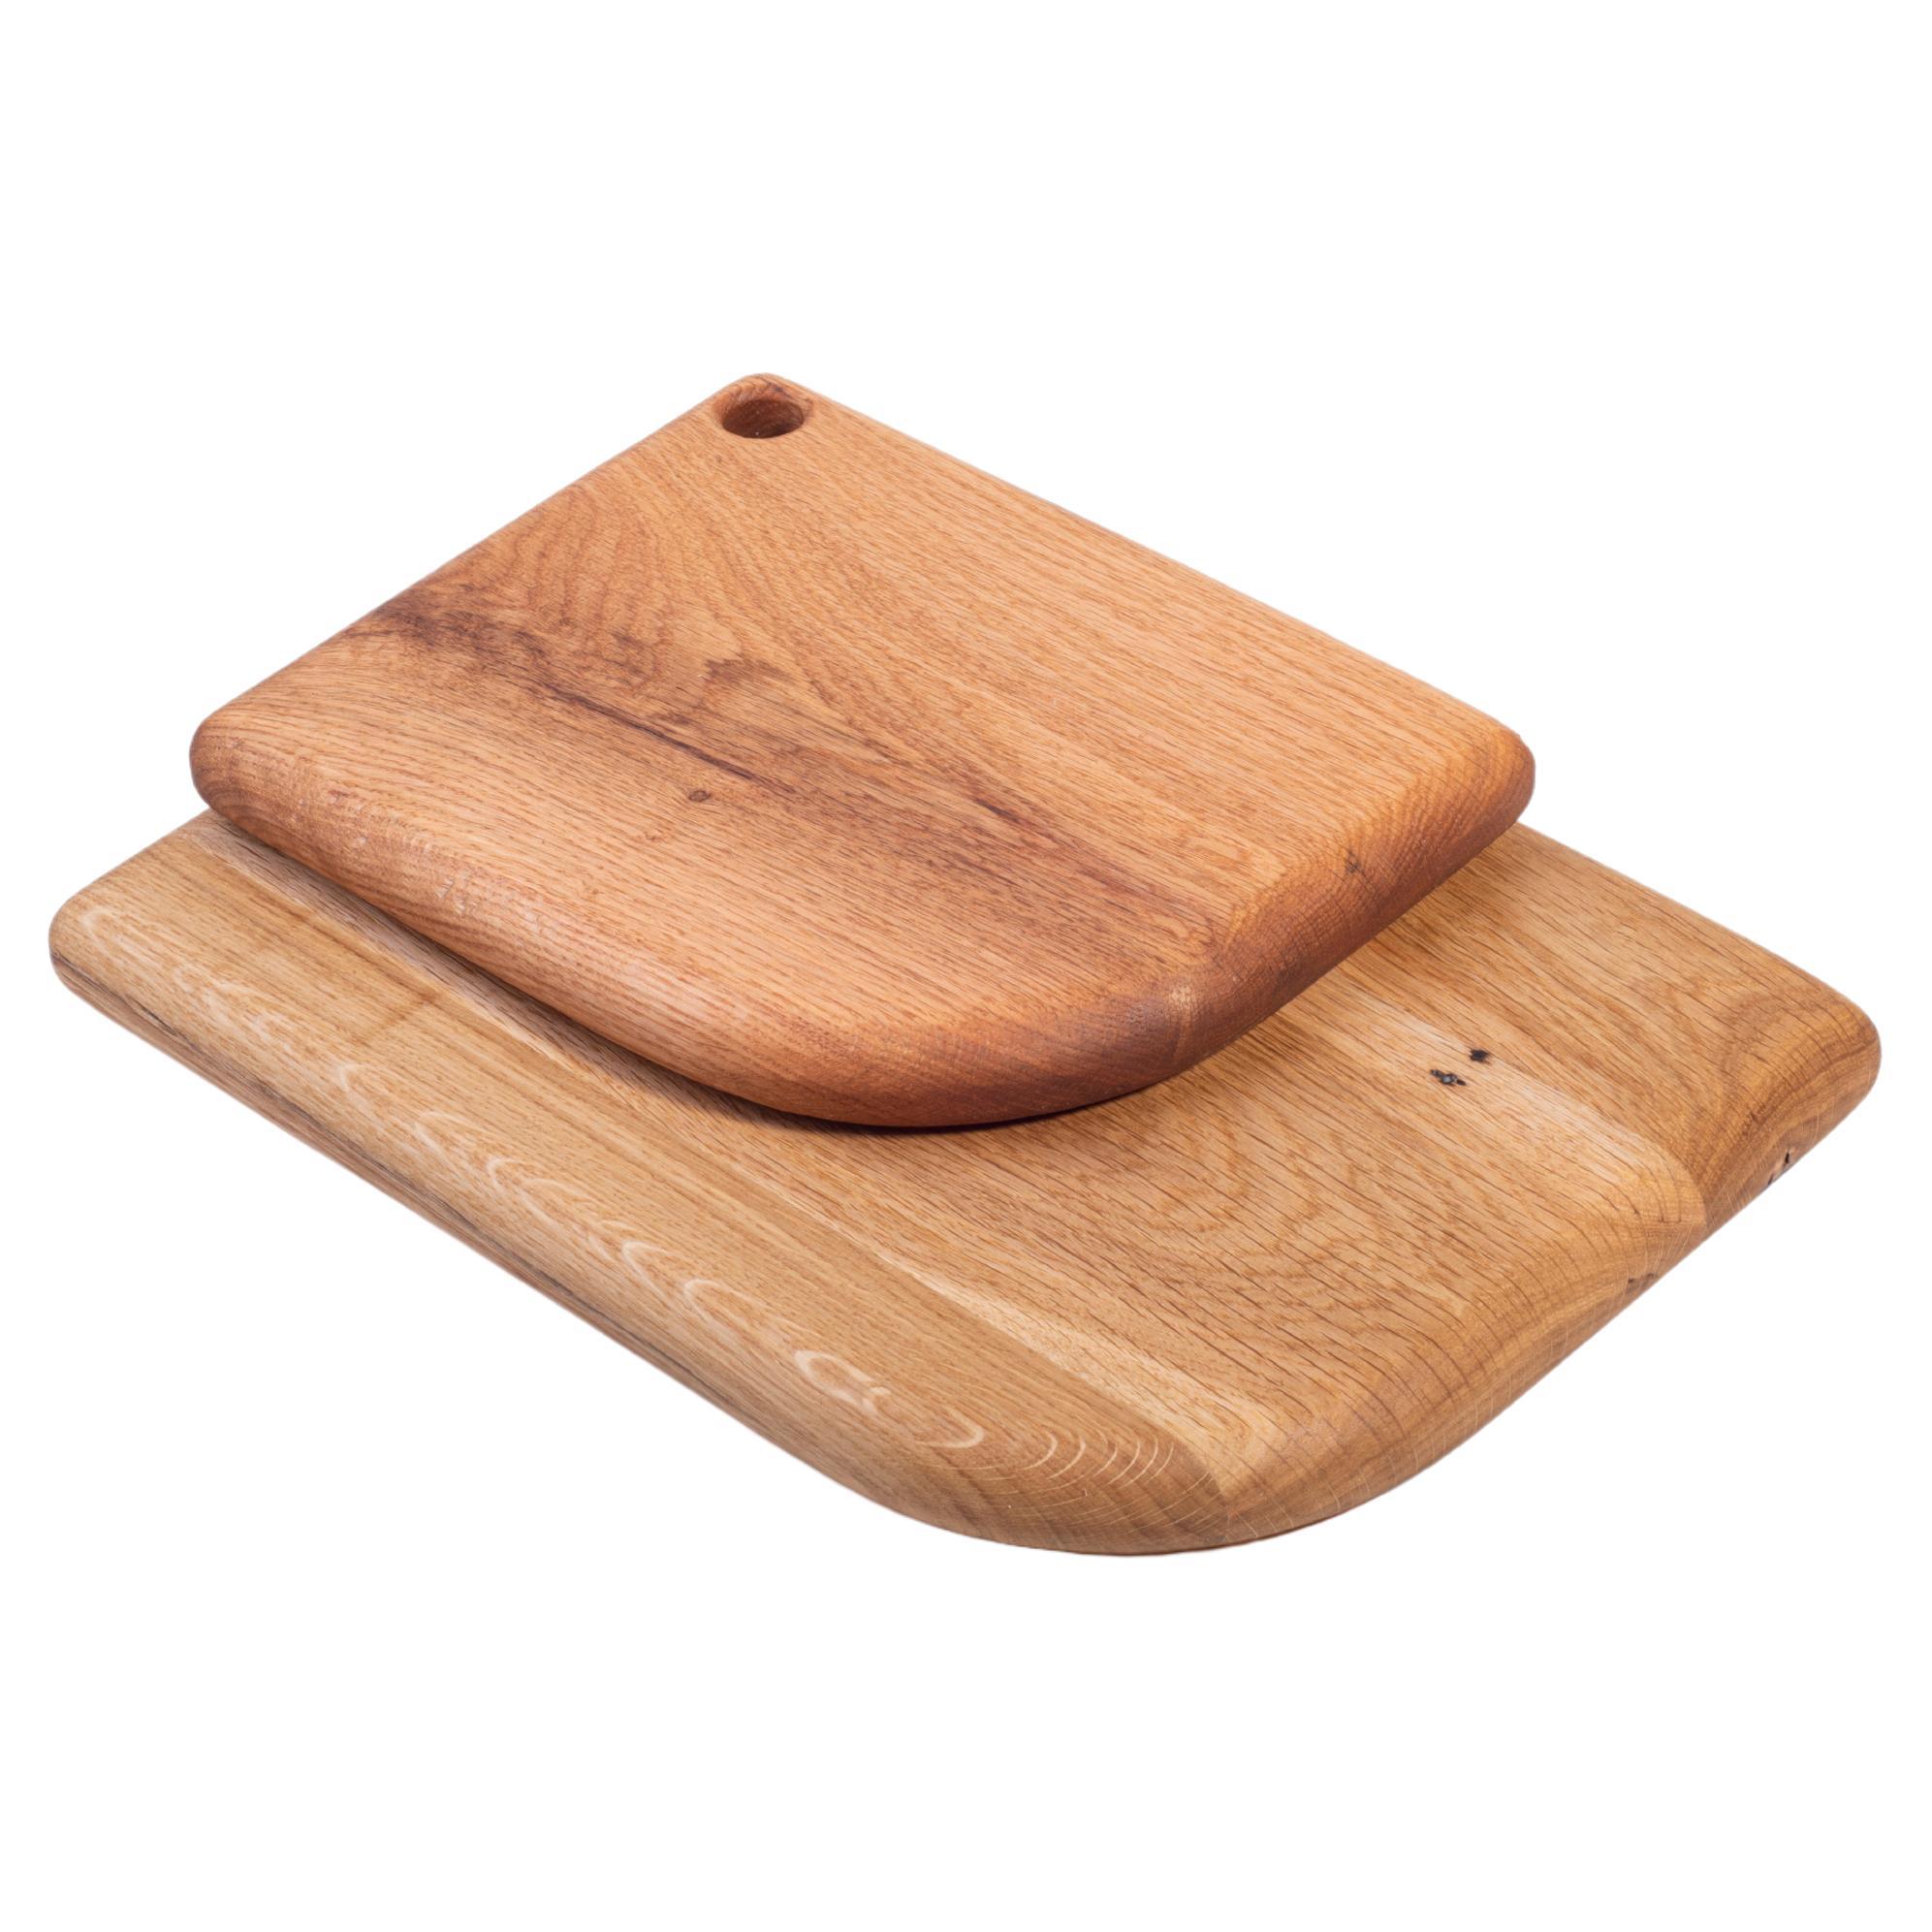 Handmade Solid Oak Wood Charcuterie and Cheese Board Set 